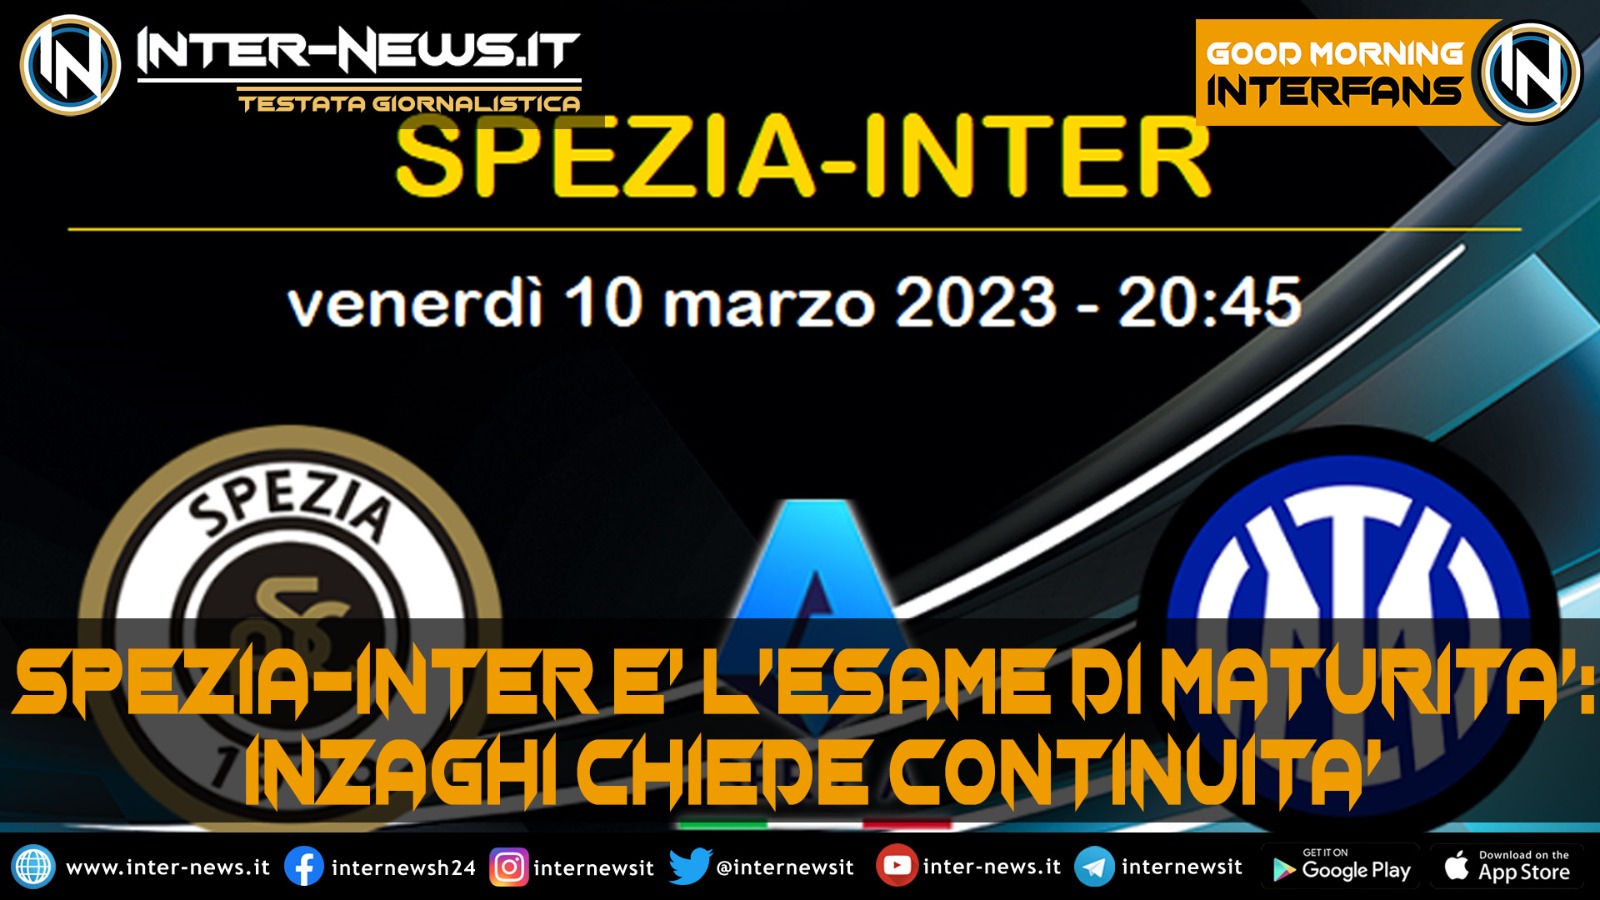 Spezia-Inter Good Morning Interfans